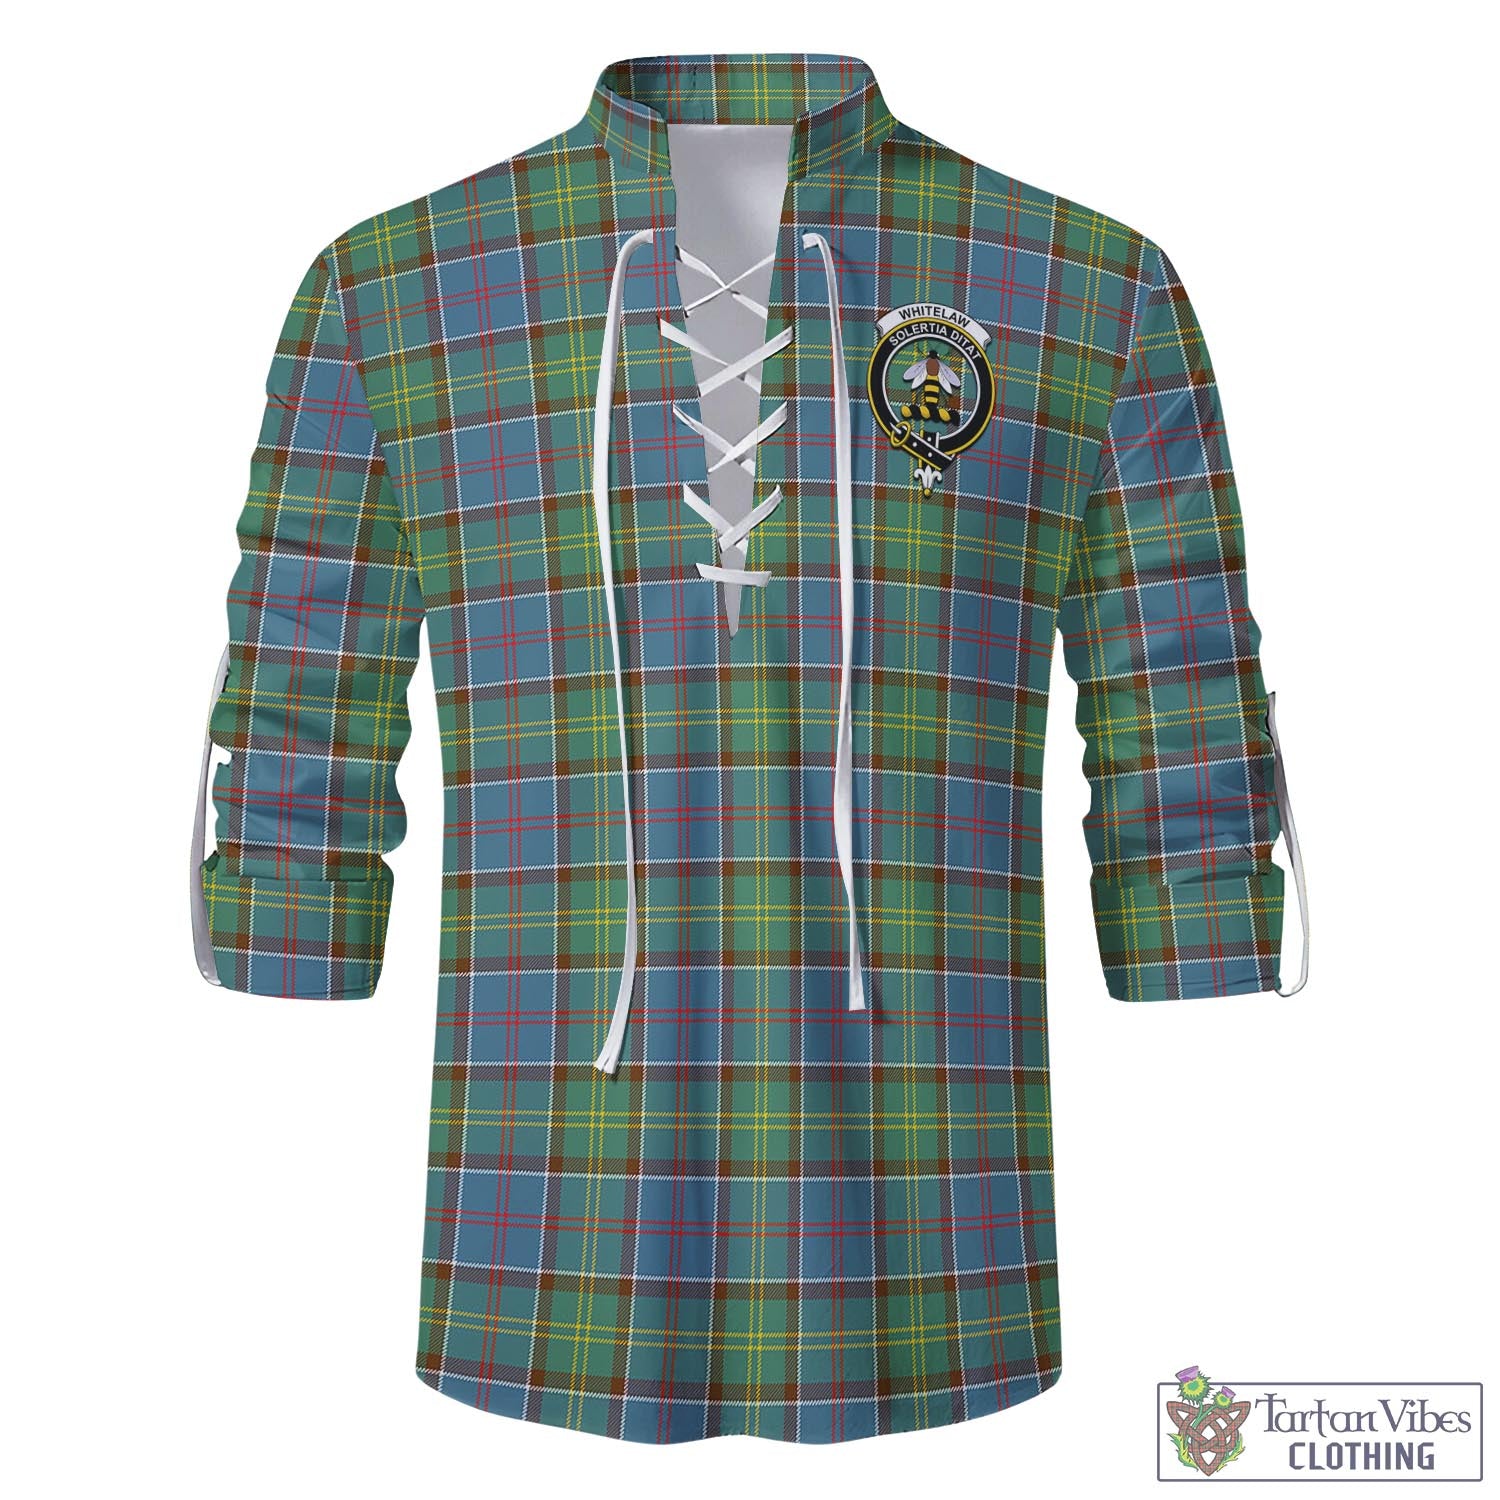 Tartan Vibes Clothing Whitelaw Tartan Men's Scottish Traditional Jacobite Ghillie Kilt Shirt with Family Crest